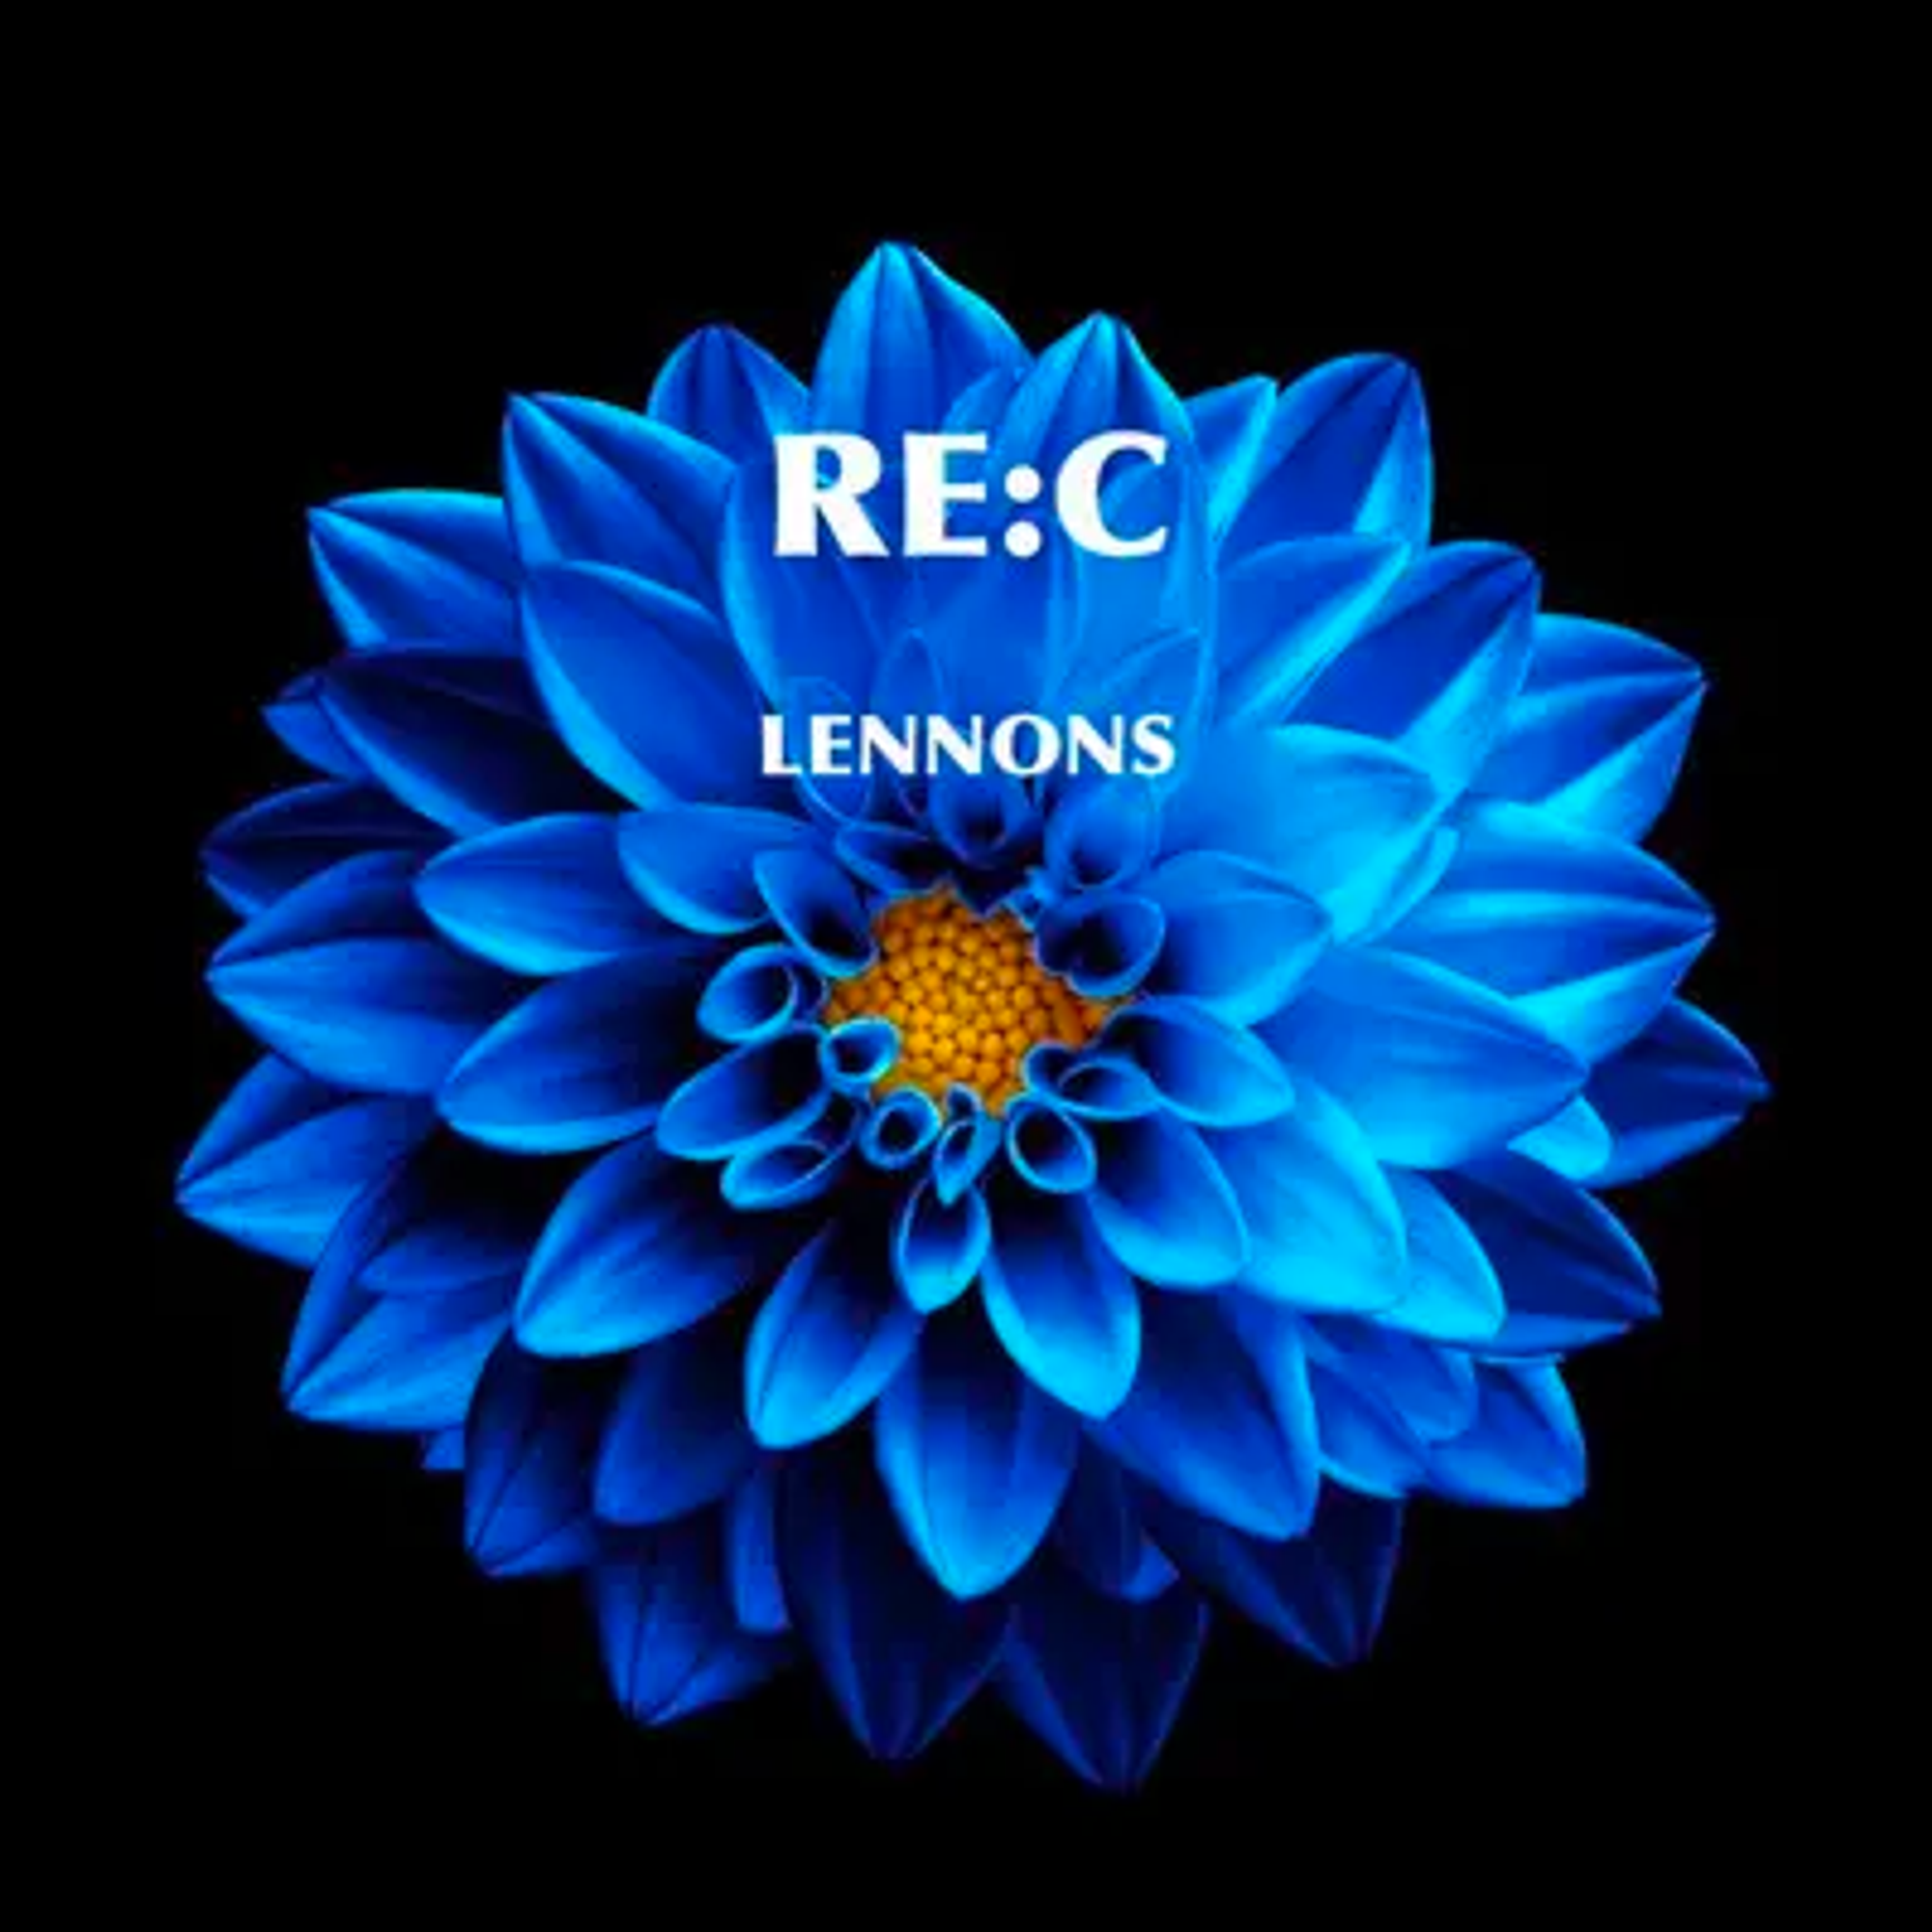 LENNONS レノンズ 1st EP “RE:C” 